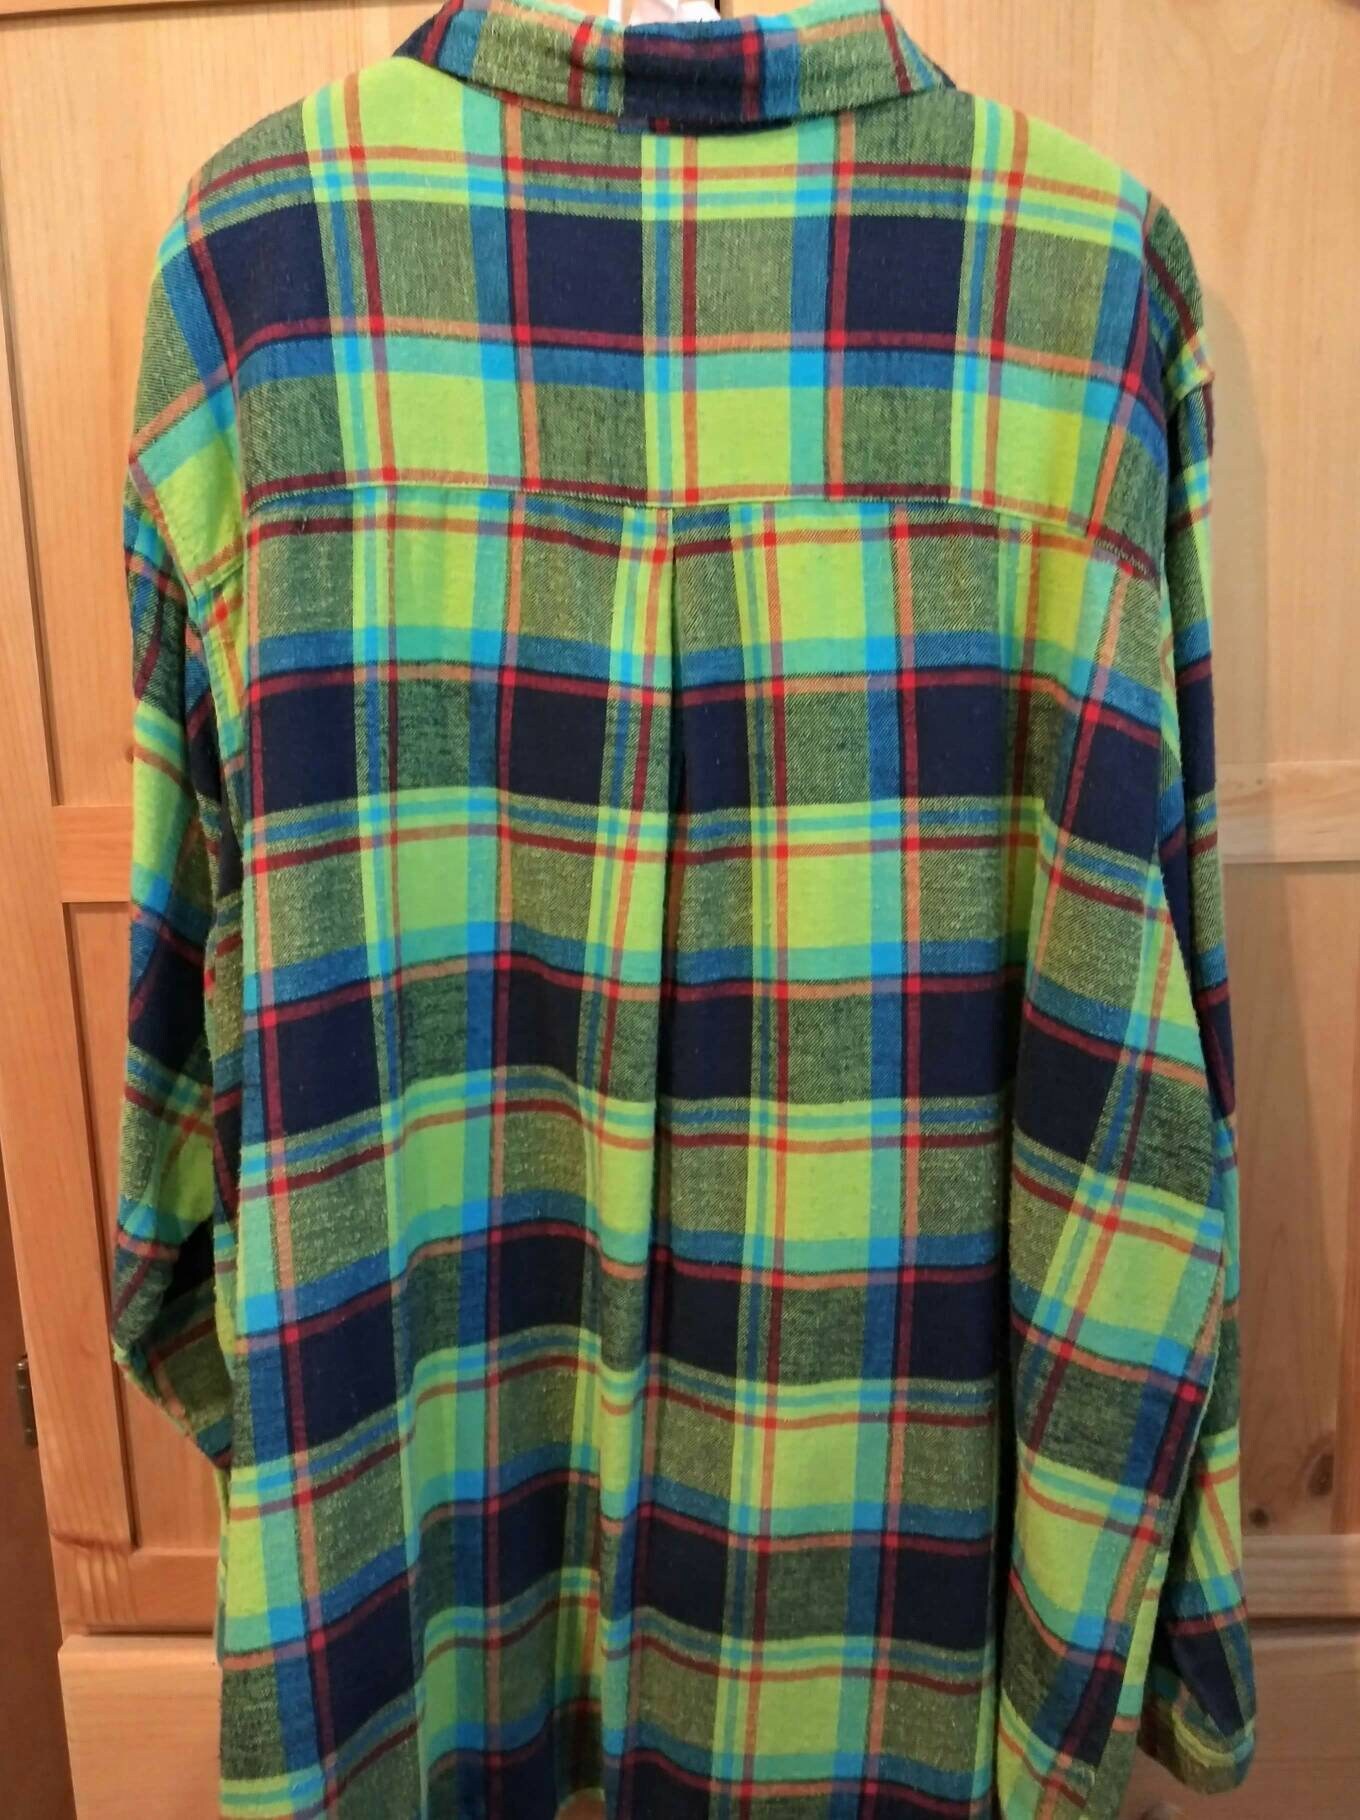 Flannel shirt bright and fun. Basic Instinct vintage 80s.